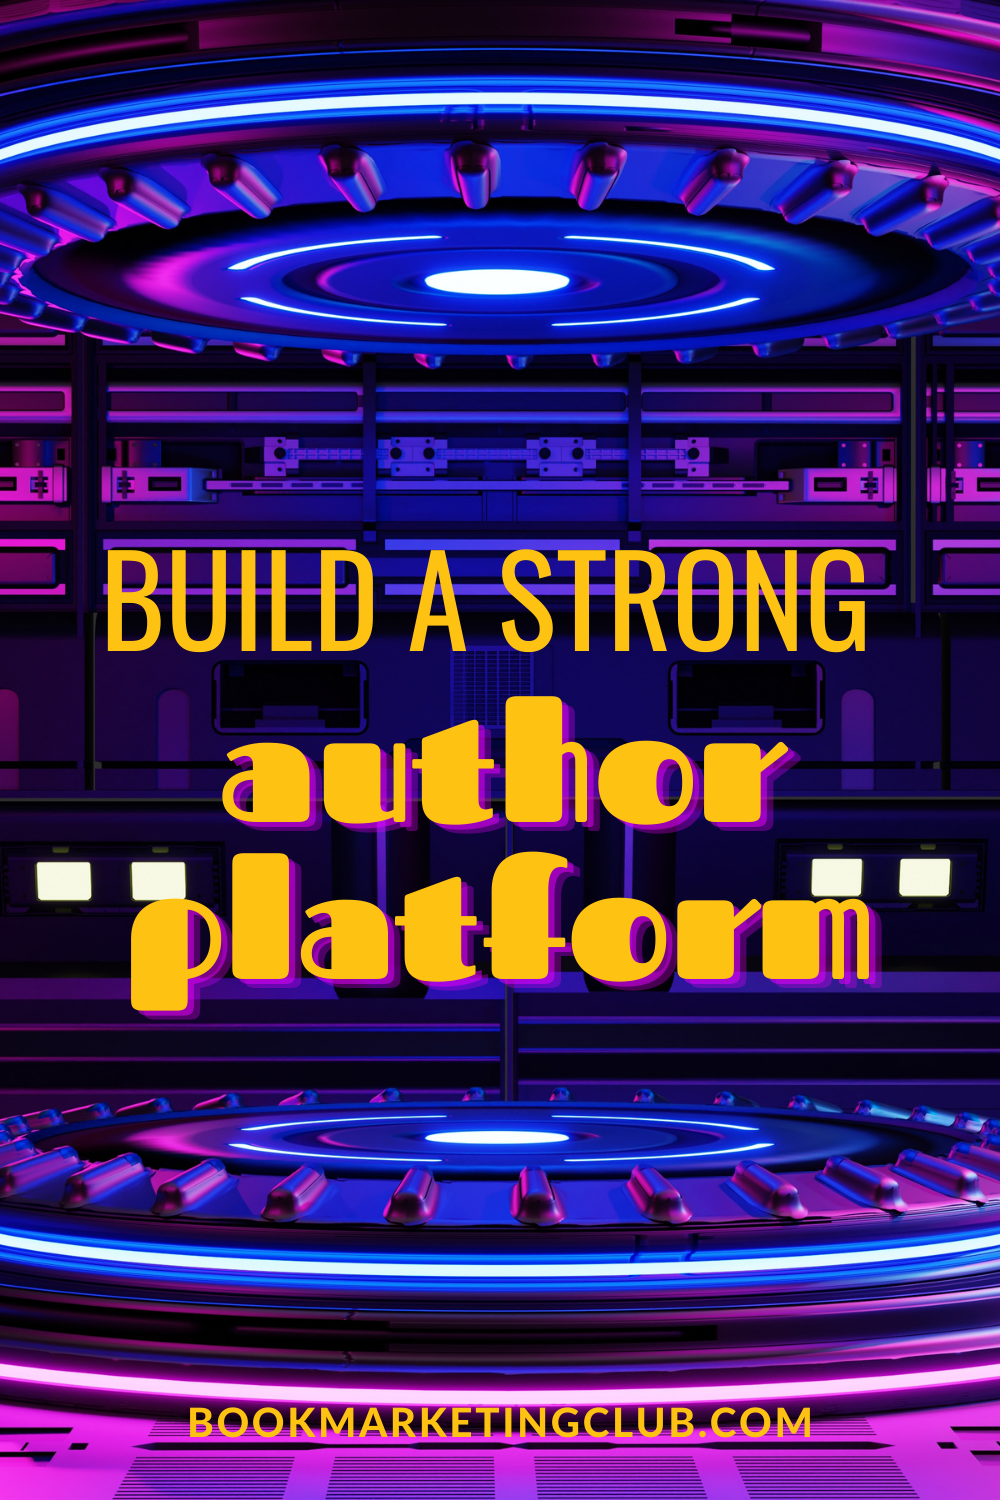 Build a strong author platform.